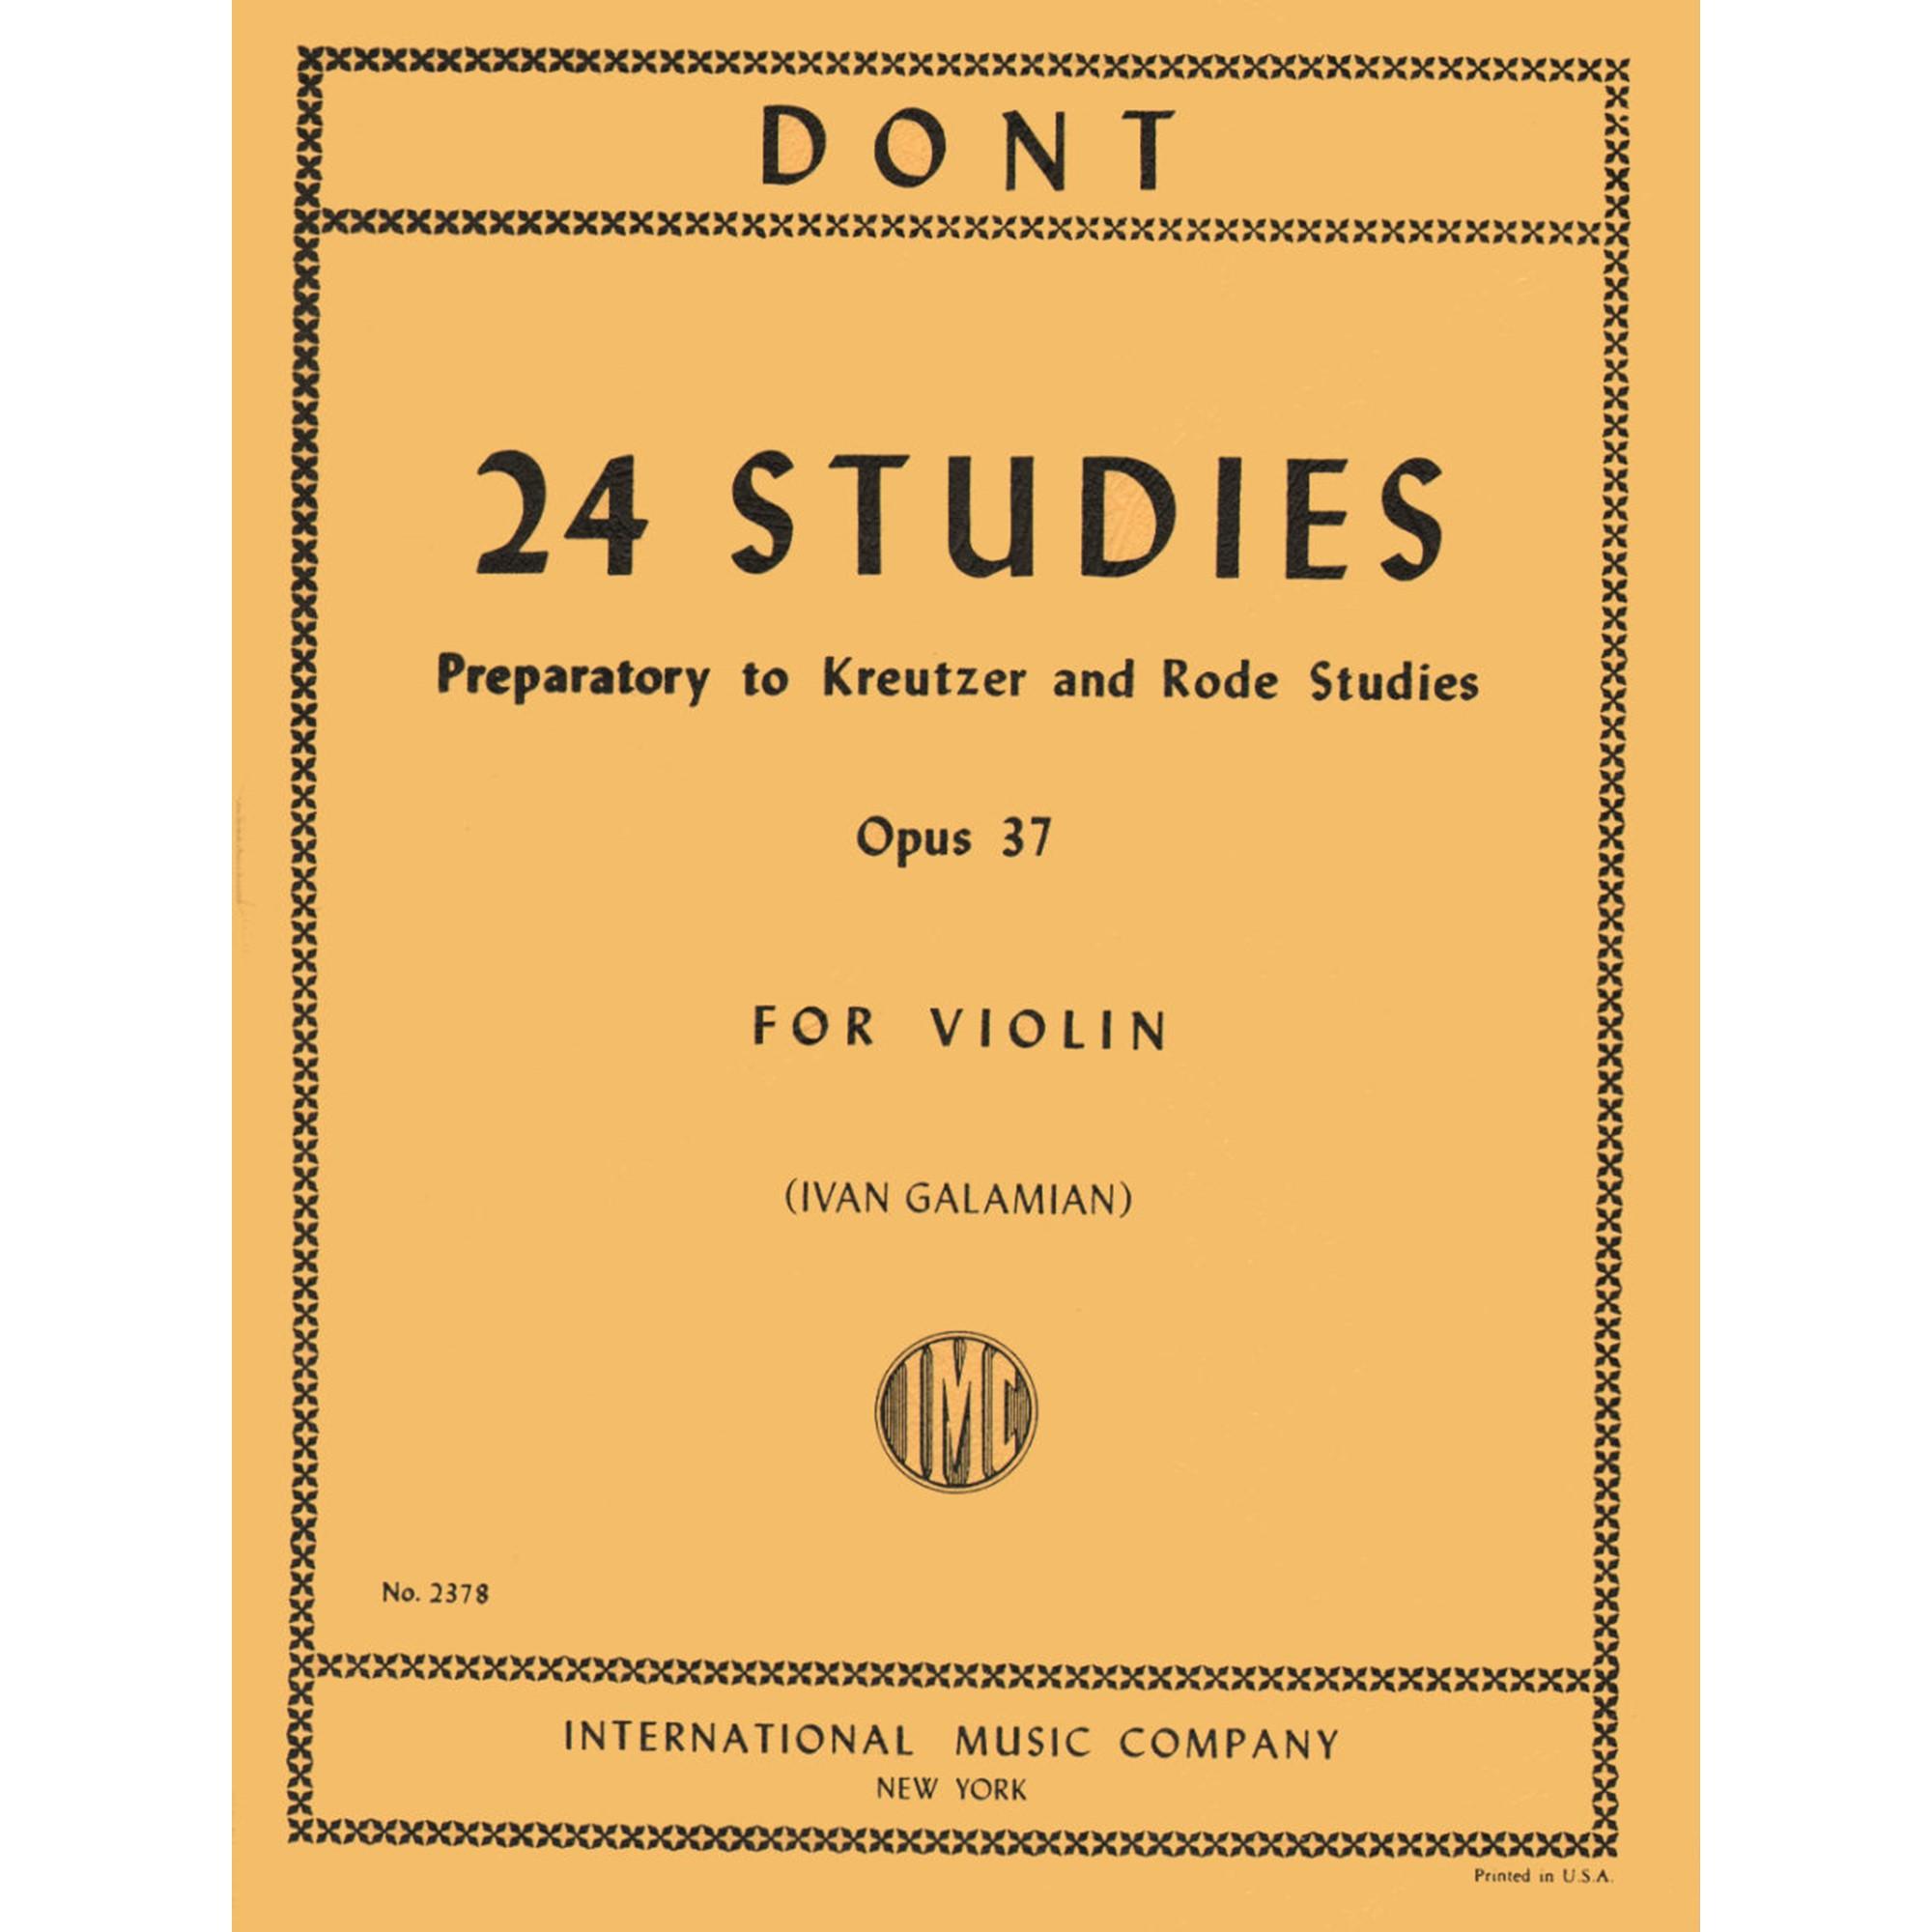 Dont 24 Studies Preparatory to Kreutzer and Rode Studies Opus 37 For Violin (Ivan Galamian) - International music company 